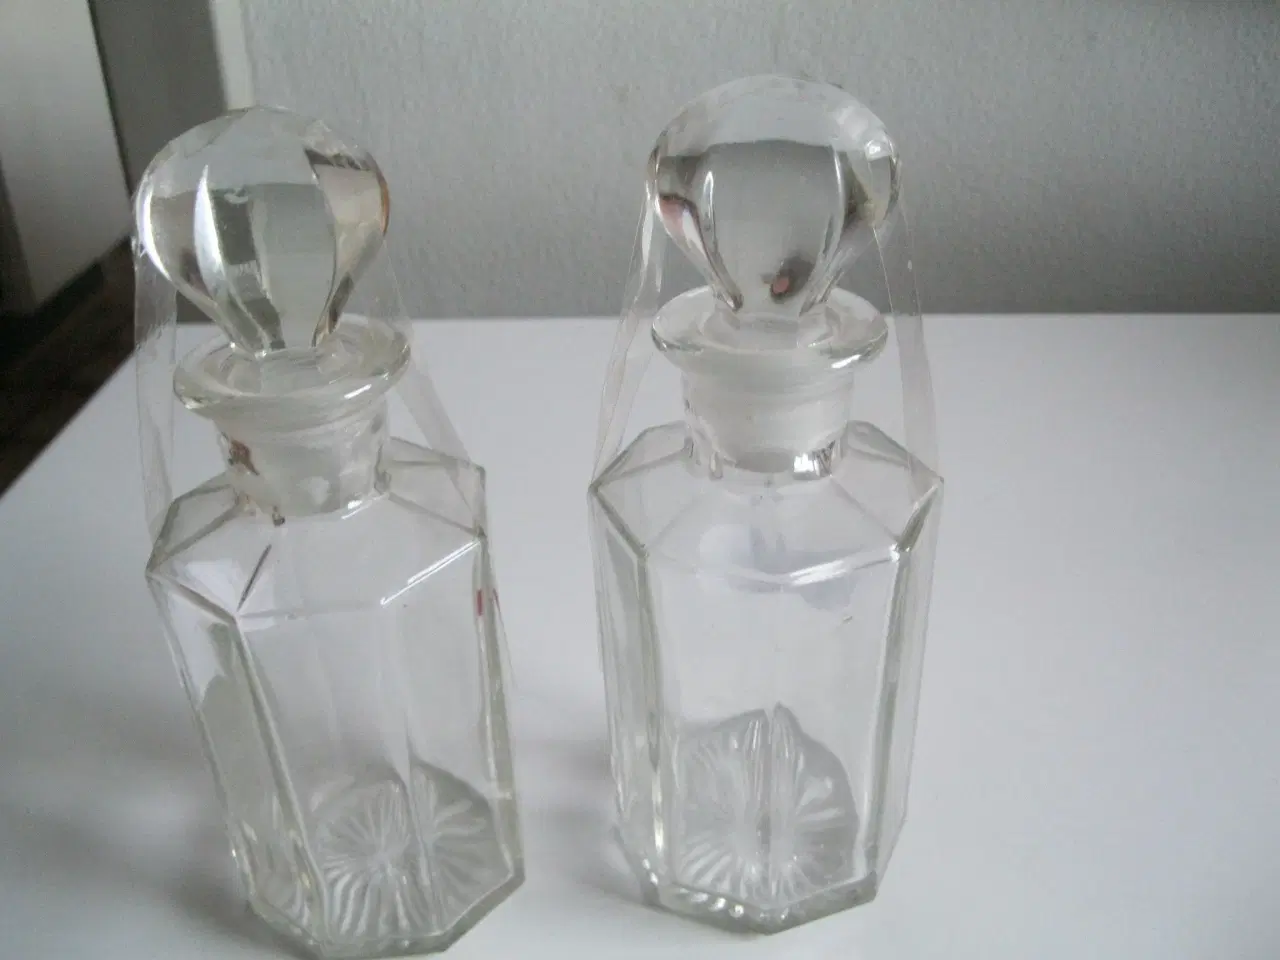 Billede 1 - 2 fine gamle glasflakoner olie/eddike